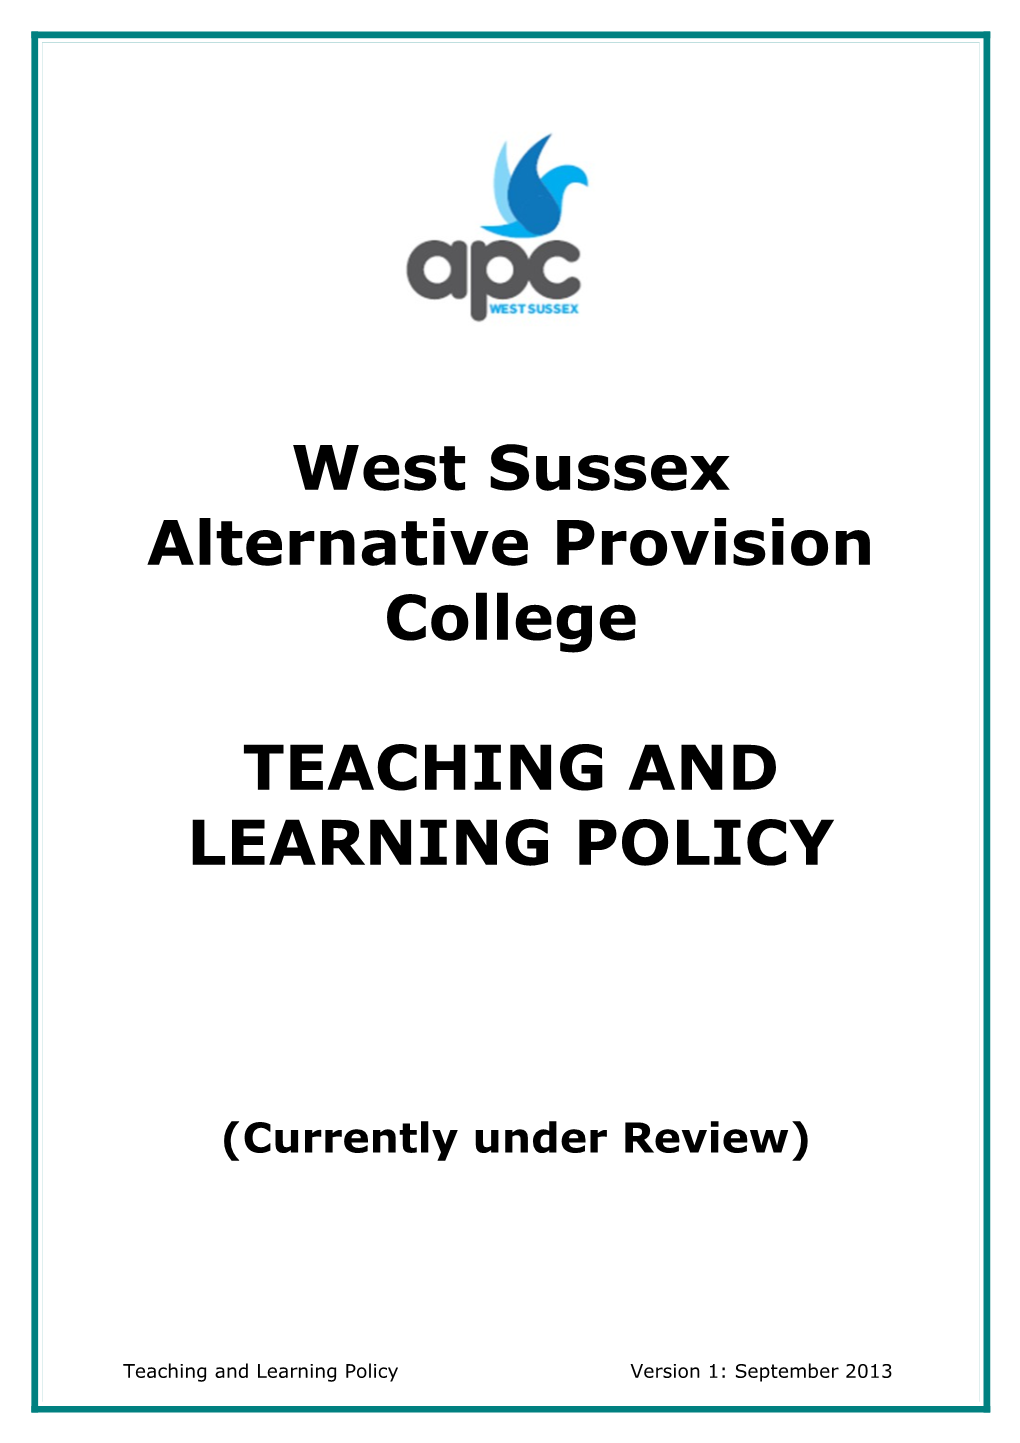 West Sussex Alternative Provision